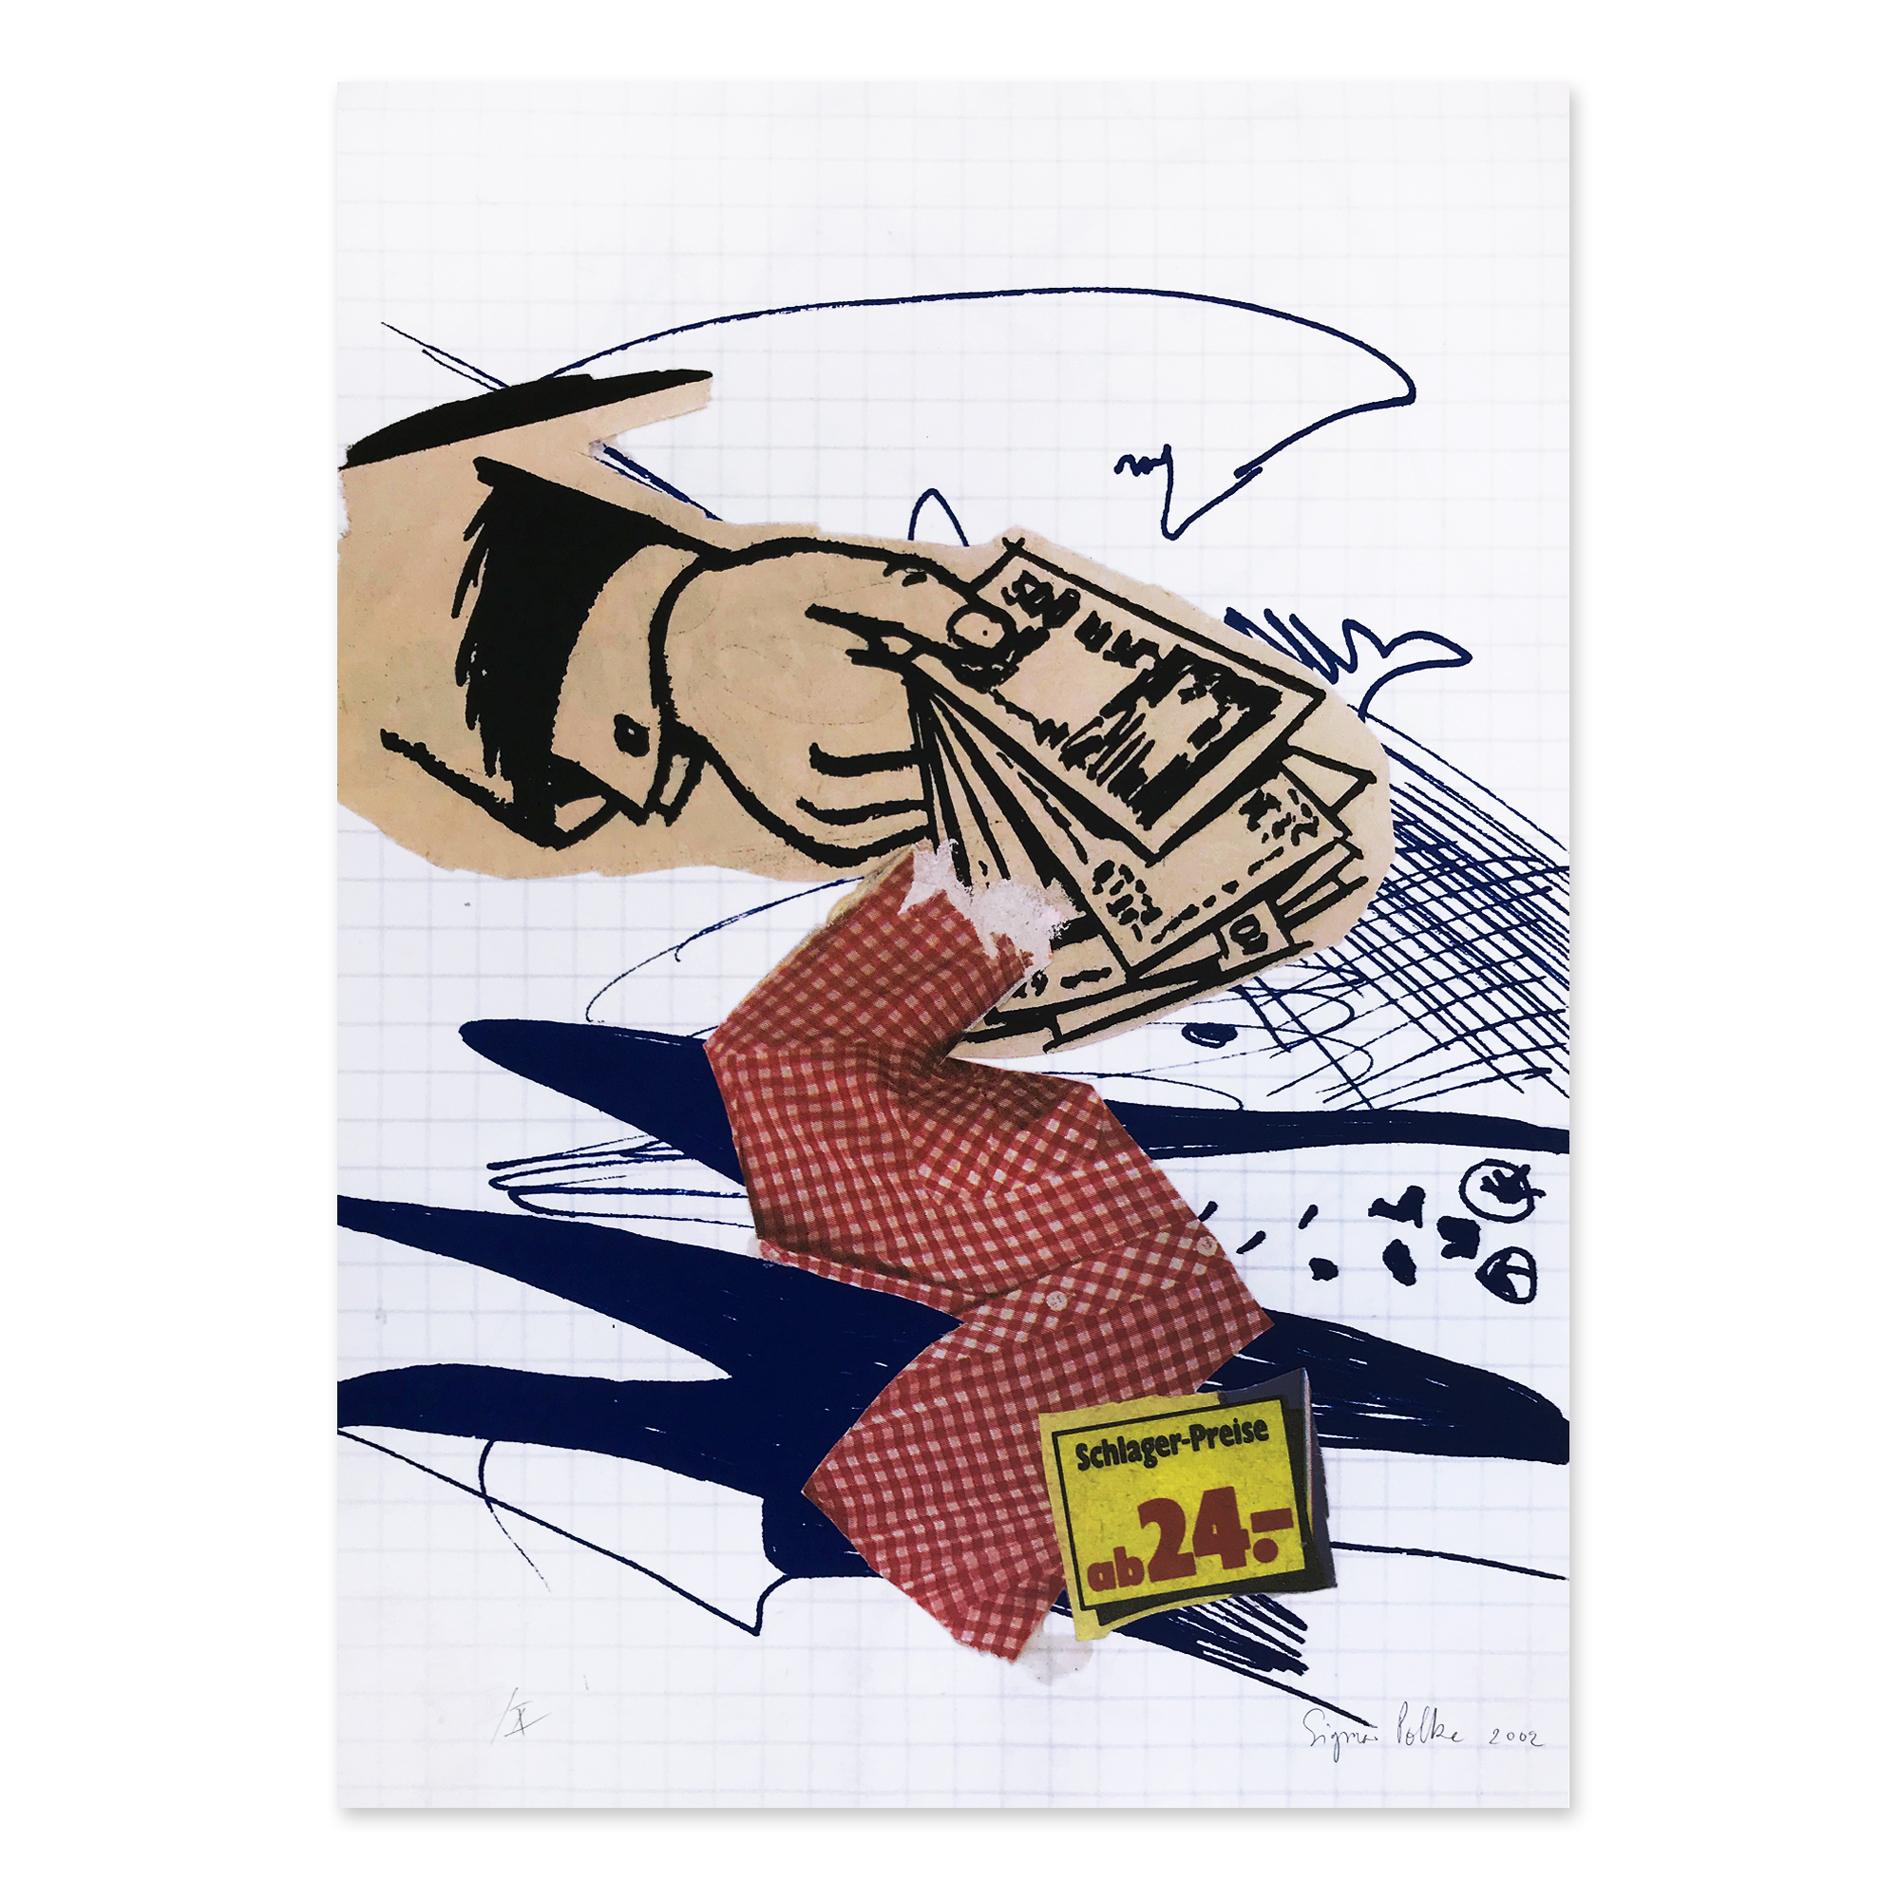 Sigmar Polke Figurative Print - Bargeld Lacht, Pop Art, Capitalist Realism, 21st Century